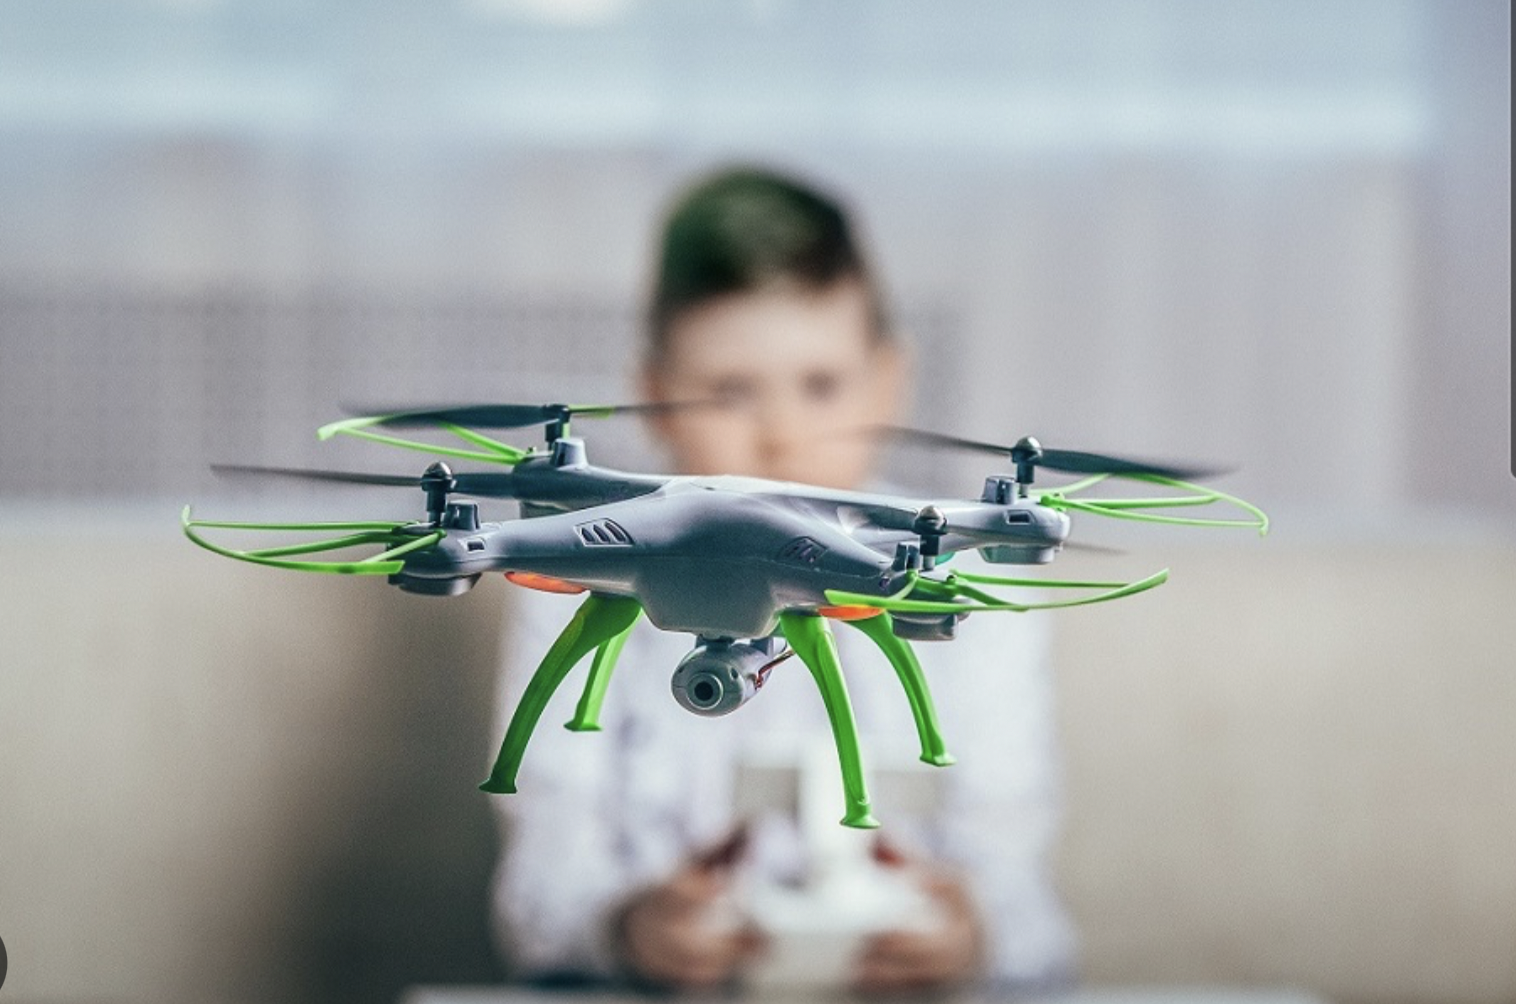 Pilotage de drone 6/16 ans - Lyon 69 - Atelier Enfant Lyon 1er